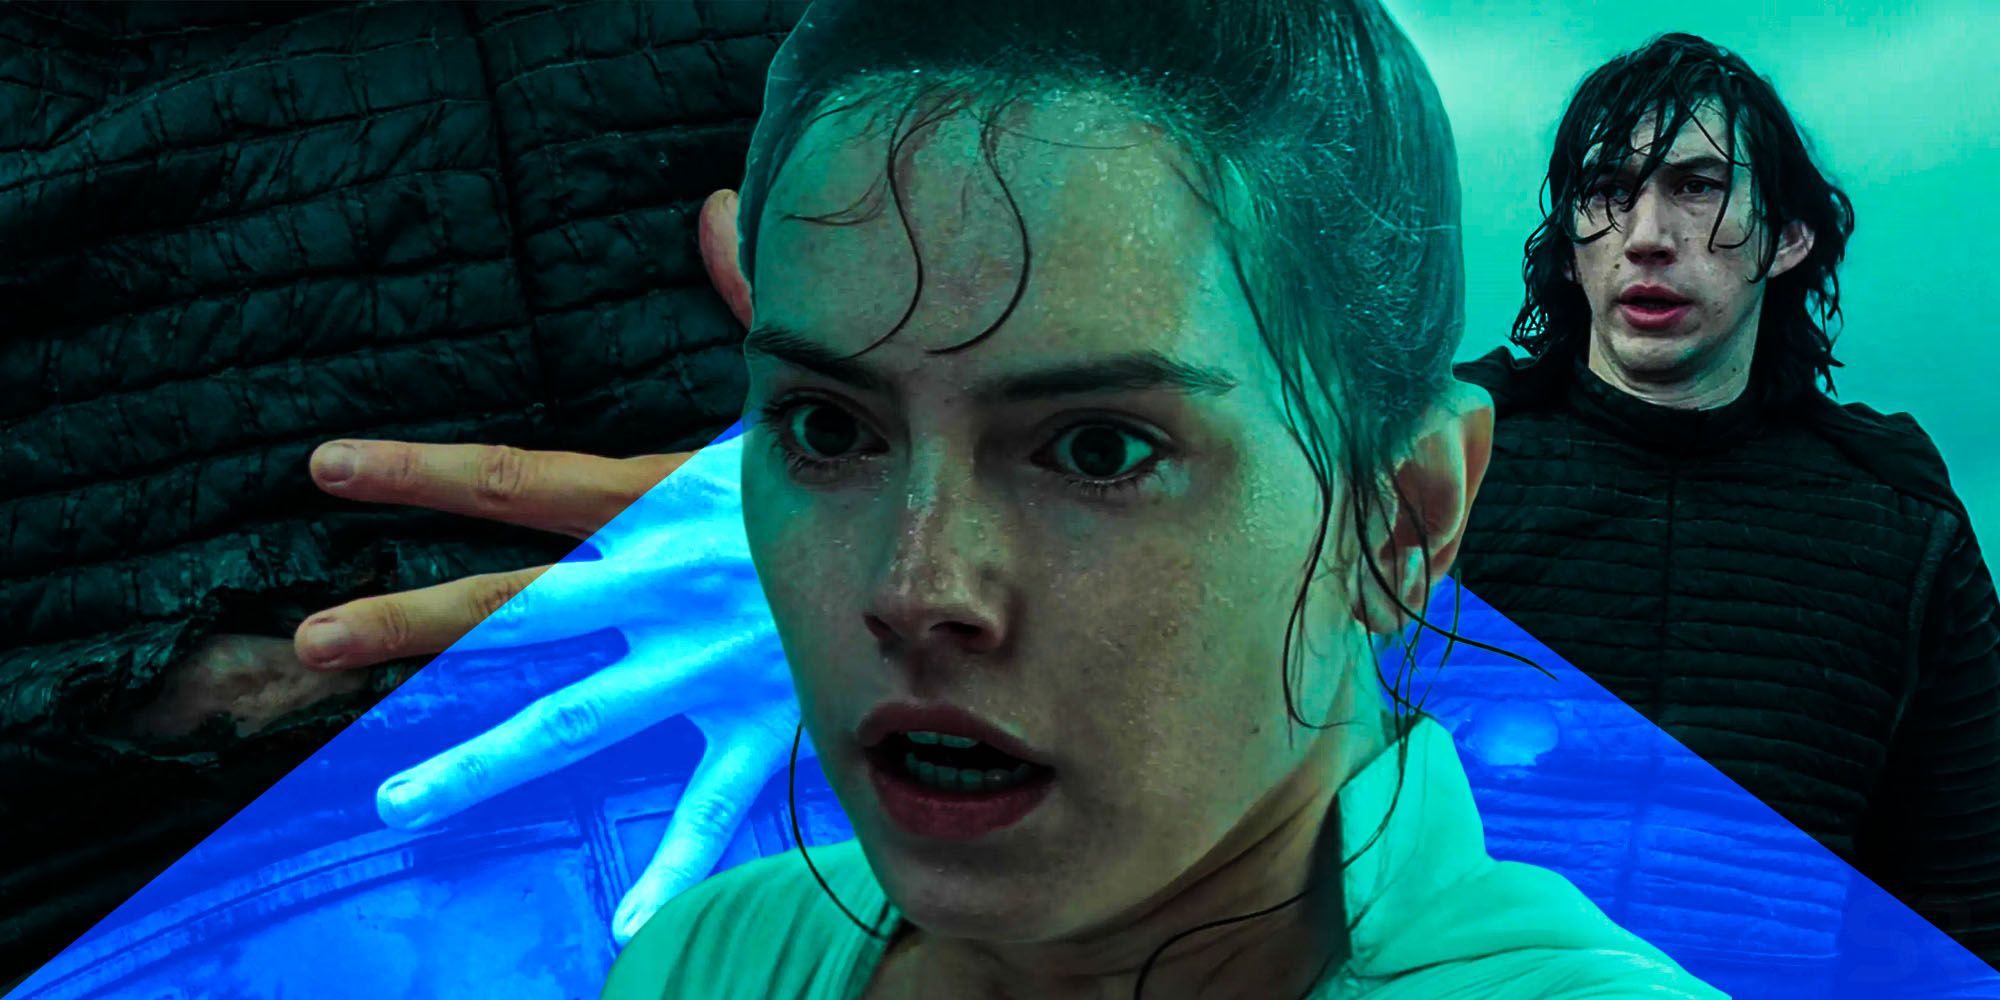 Star Wars rise of skywalker rey healing powers freed kylo ren from dark side